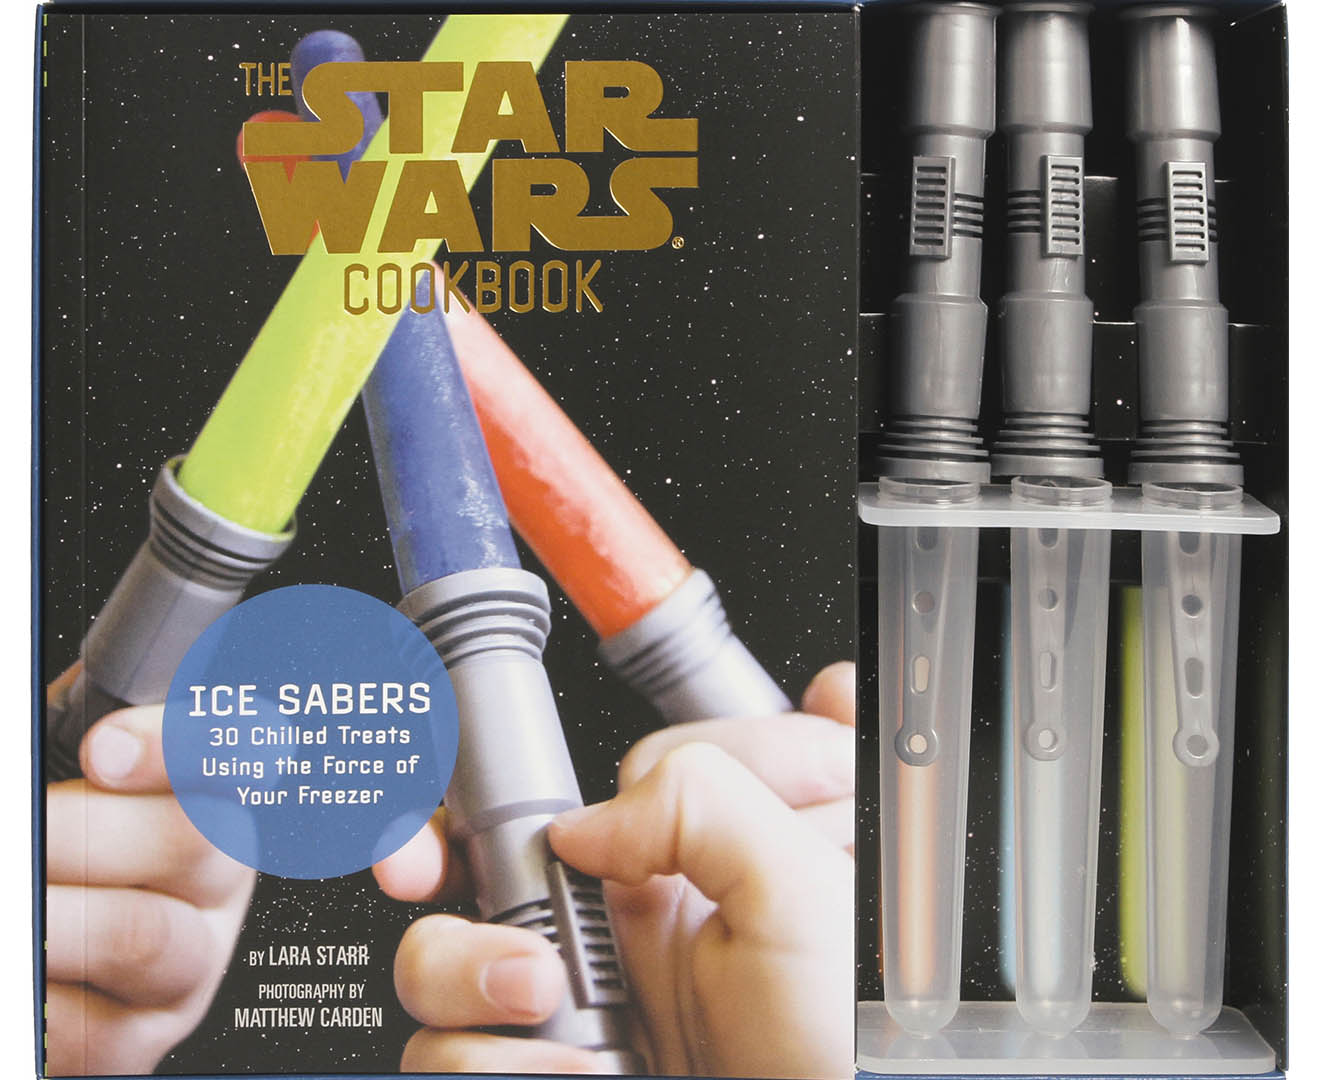 The Star Wars Cookbook: Ice Sabers